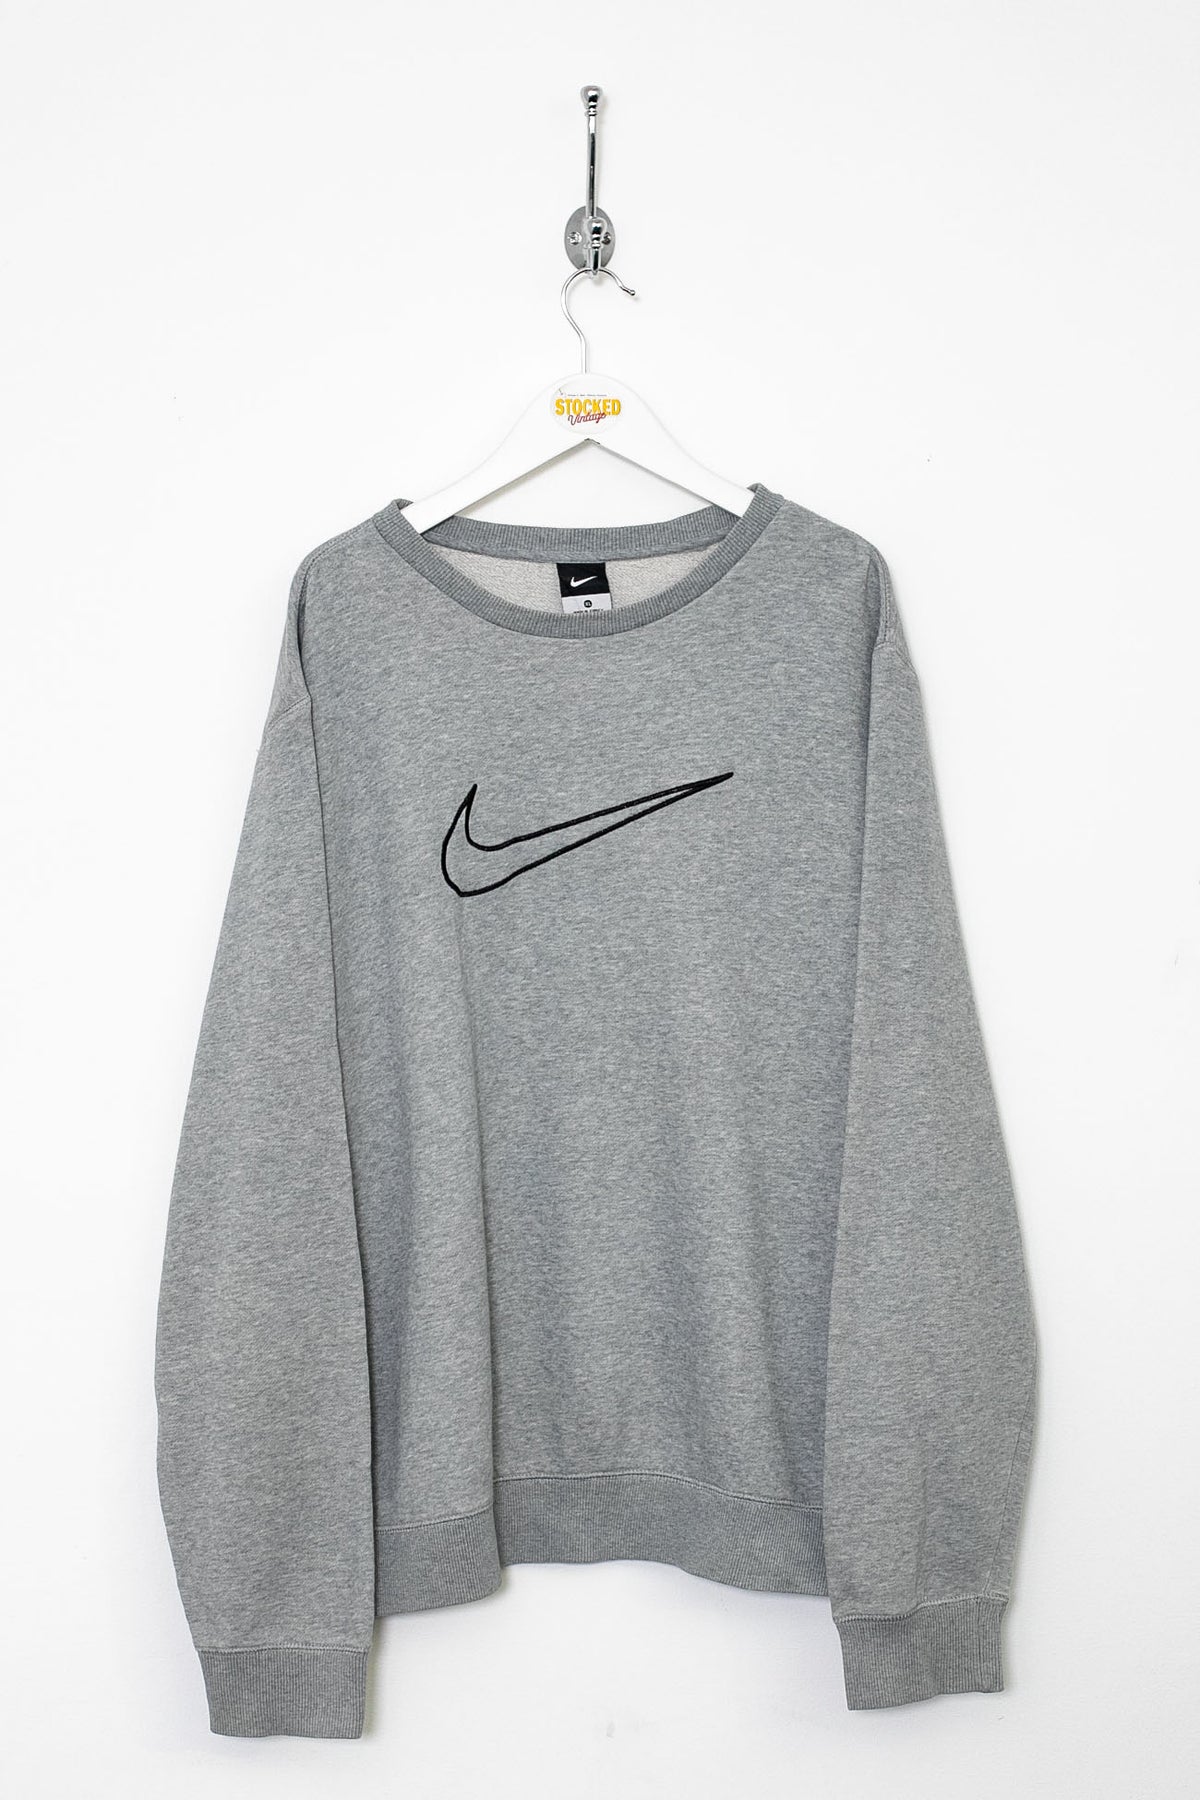 00s Nike Sweatshirt (XL)